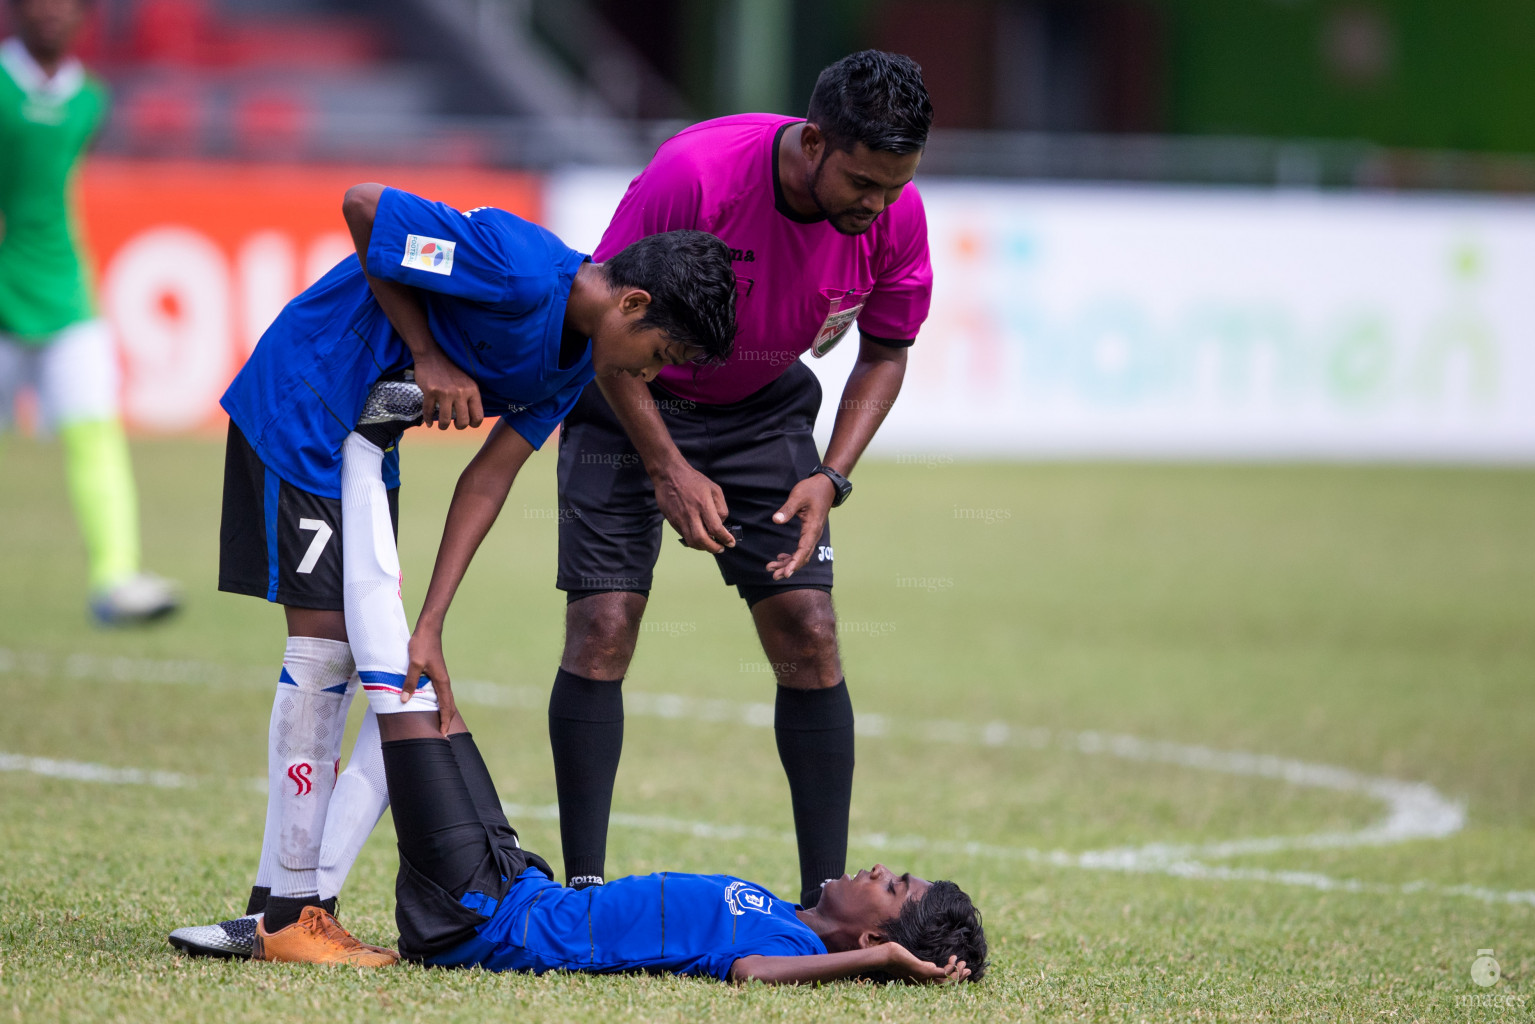 Dharumavantha School vs Gulhee School in Mamen Inter-School Football Tournament 2019 (U15) on 26th February 2019, Monday in Male' Maldives